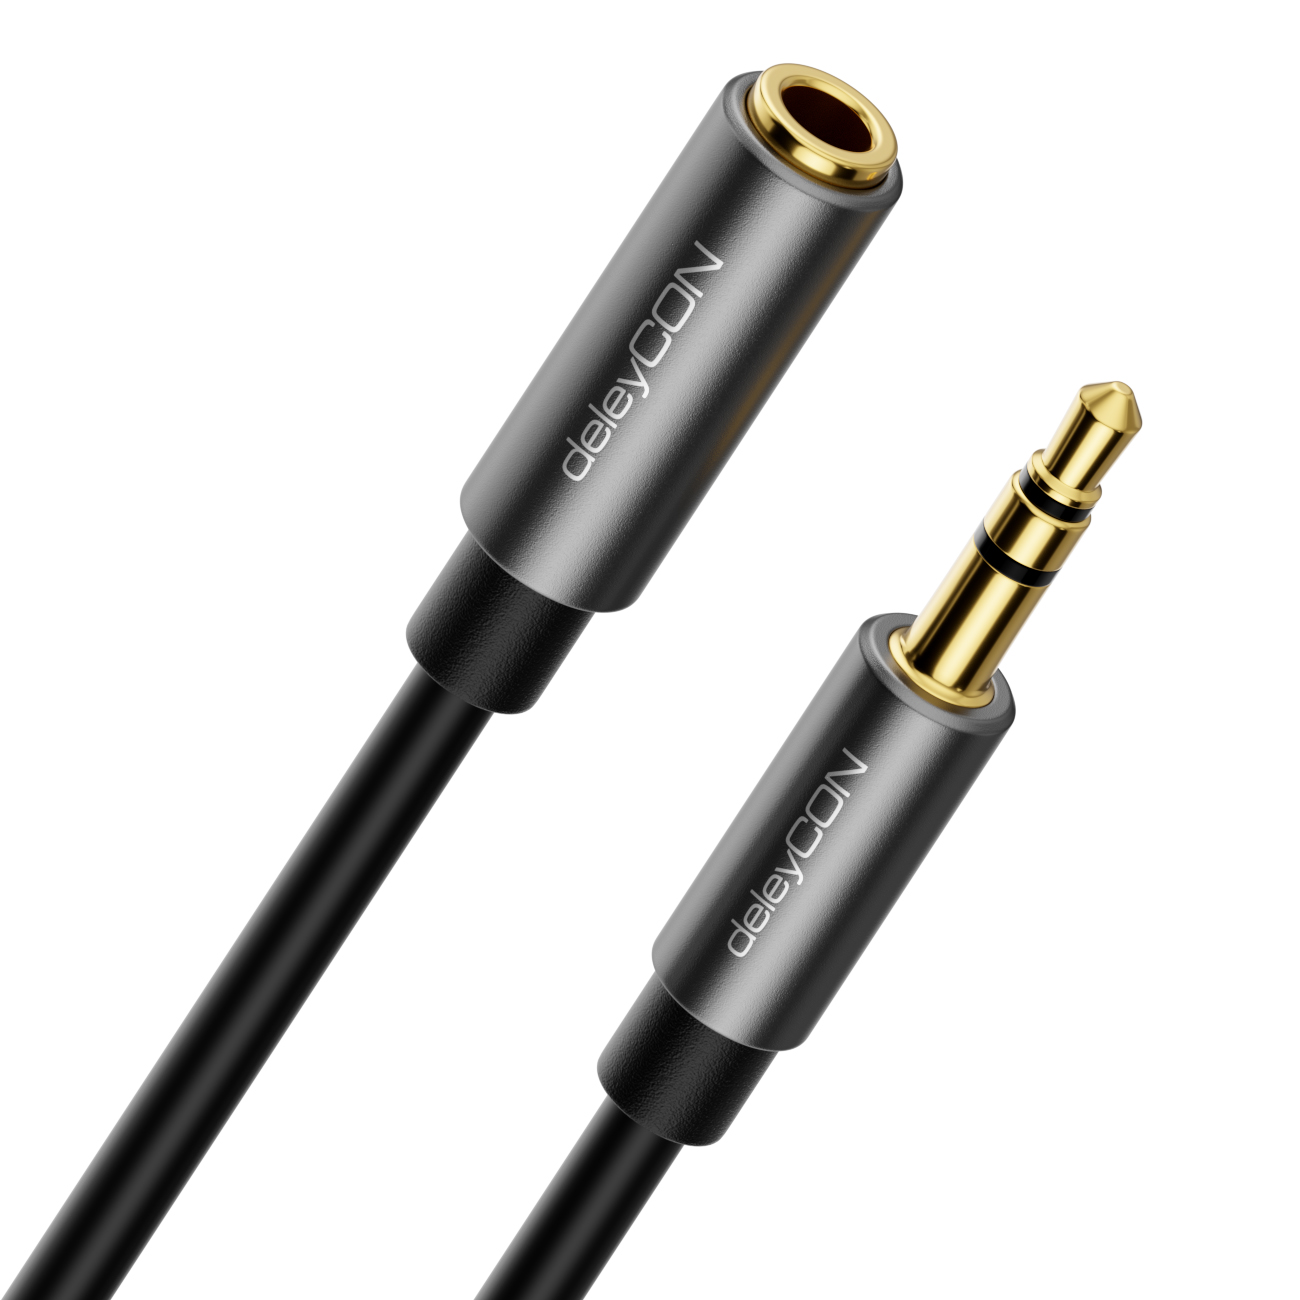 deleyCON Klinke Audio Stereo AUX Kabel Verlängerungskabel 3,5mm  Klinkenkabel Audiokabel Verlängerung - deleyCON